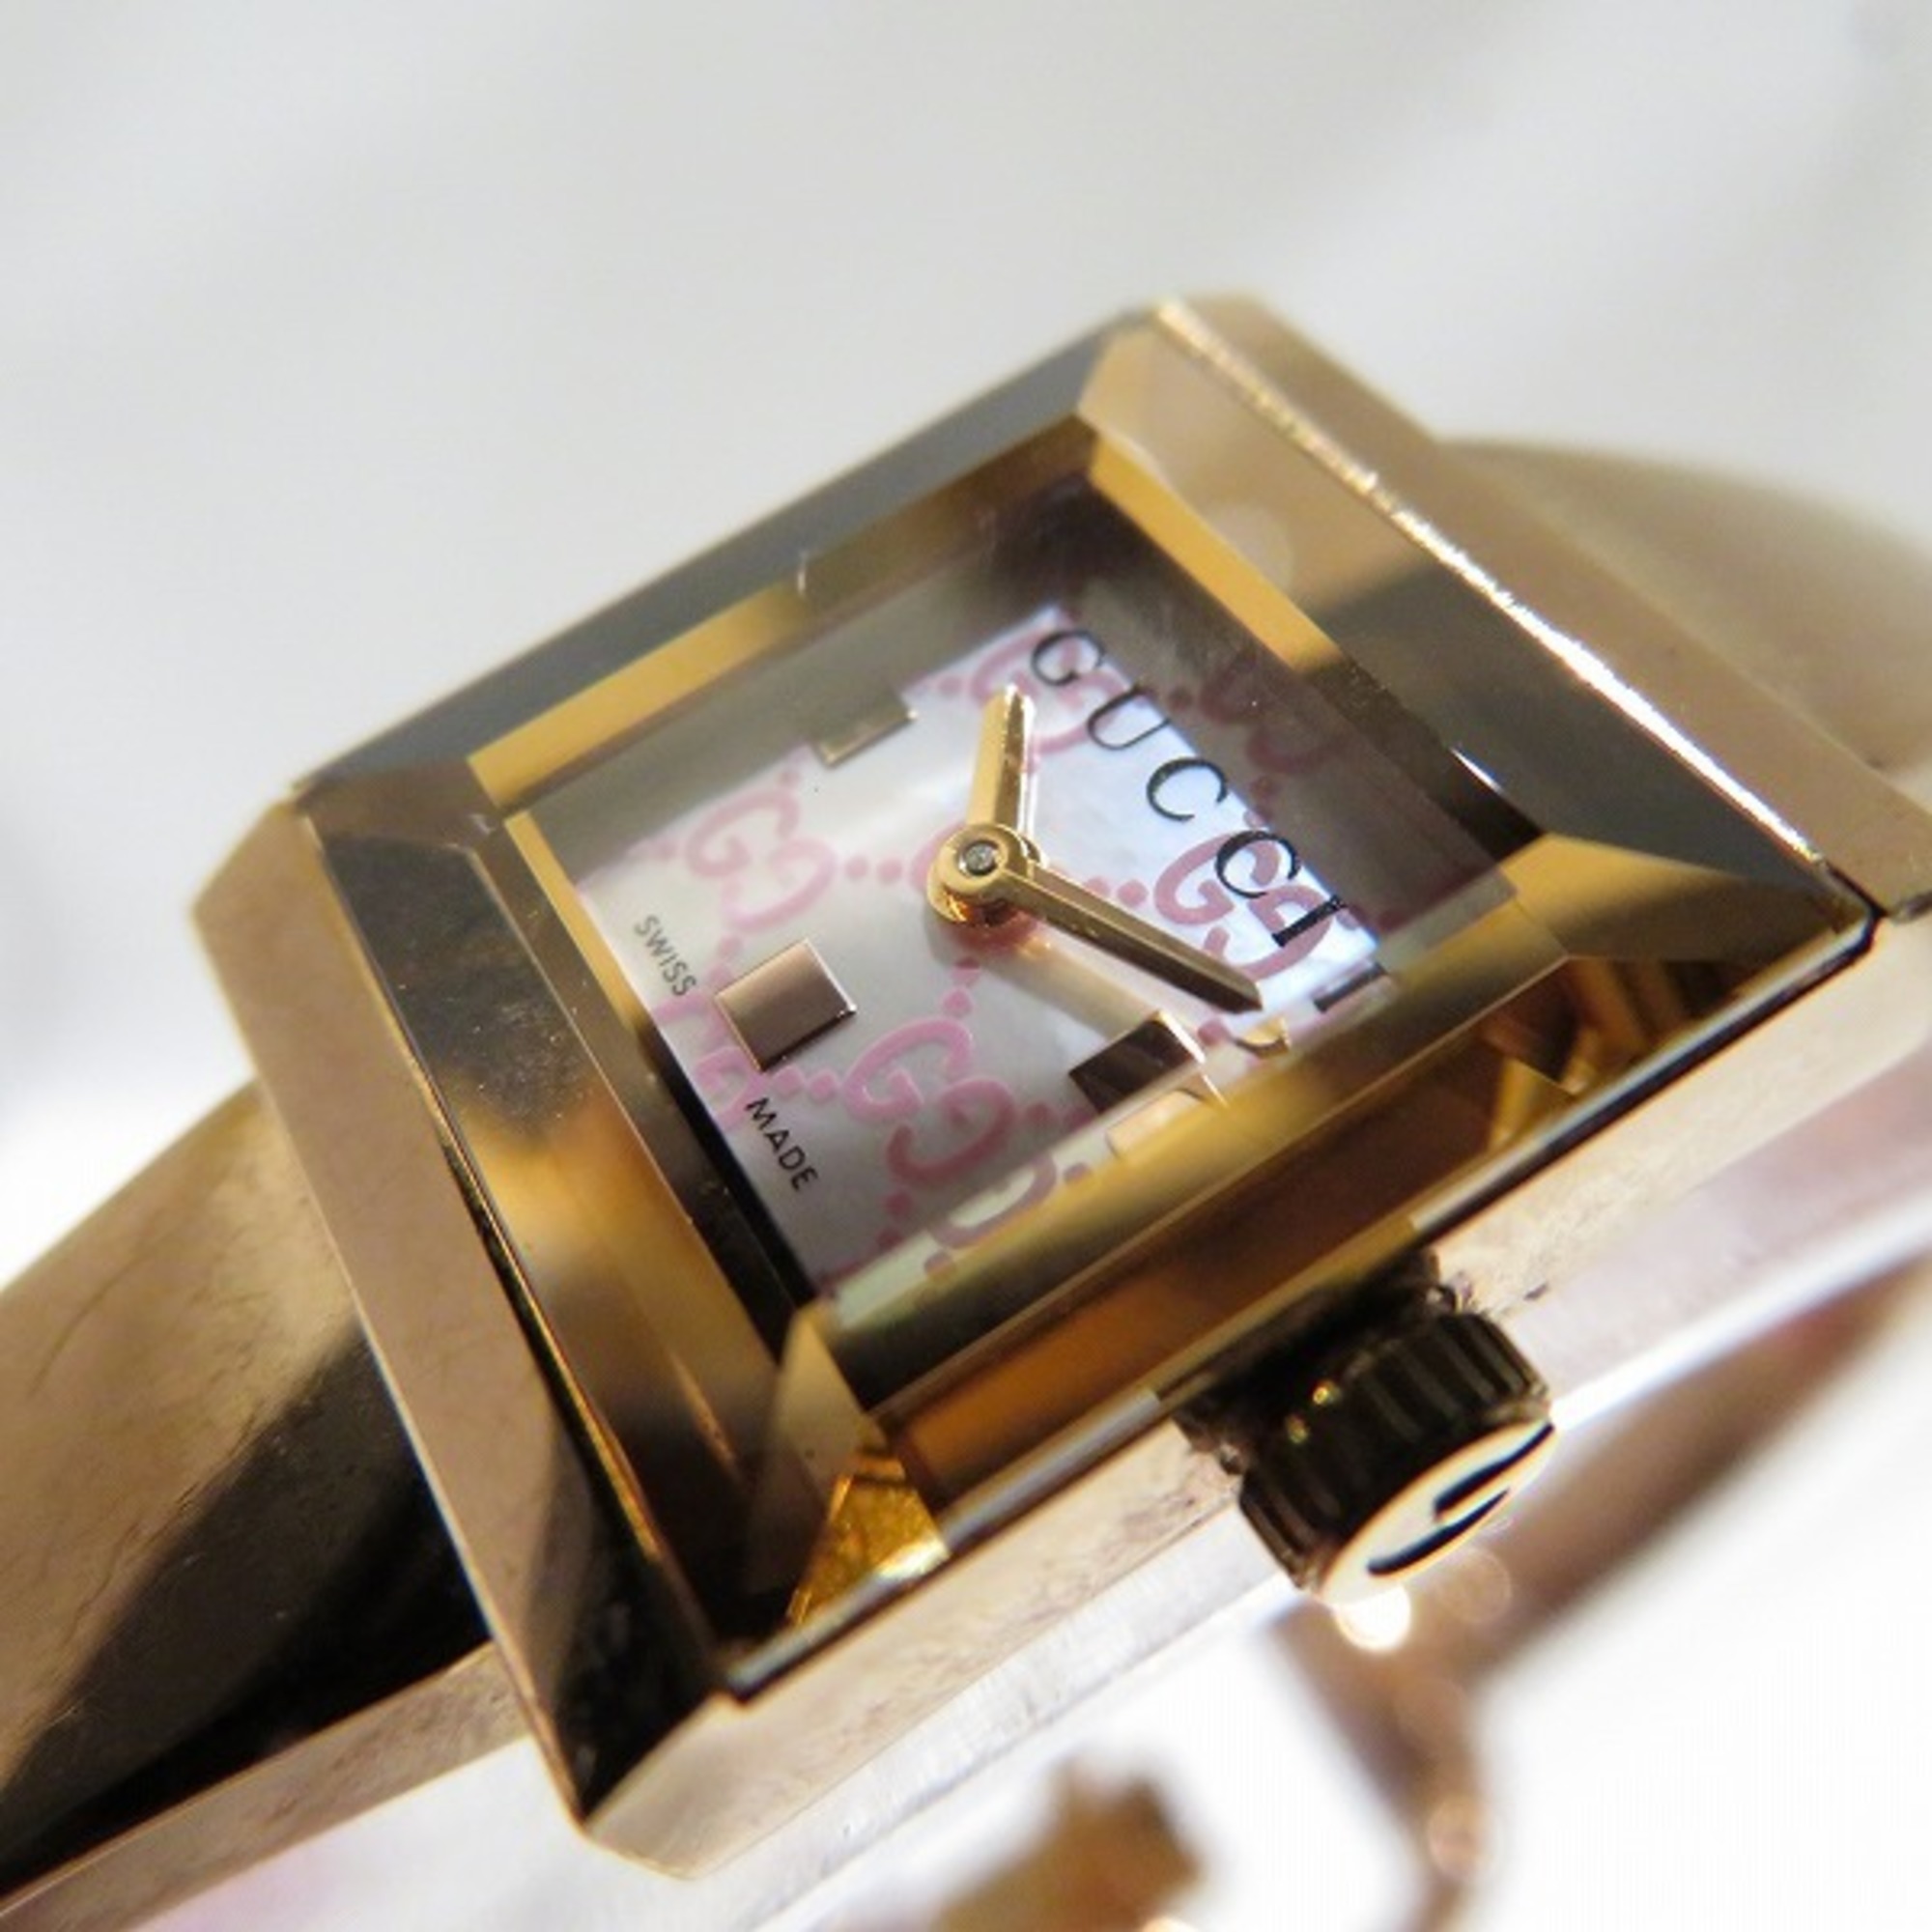 Gucci GUCCI bangle watch 128.5 quartz wristwatch G frame ladies